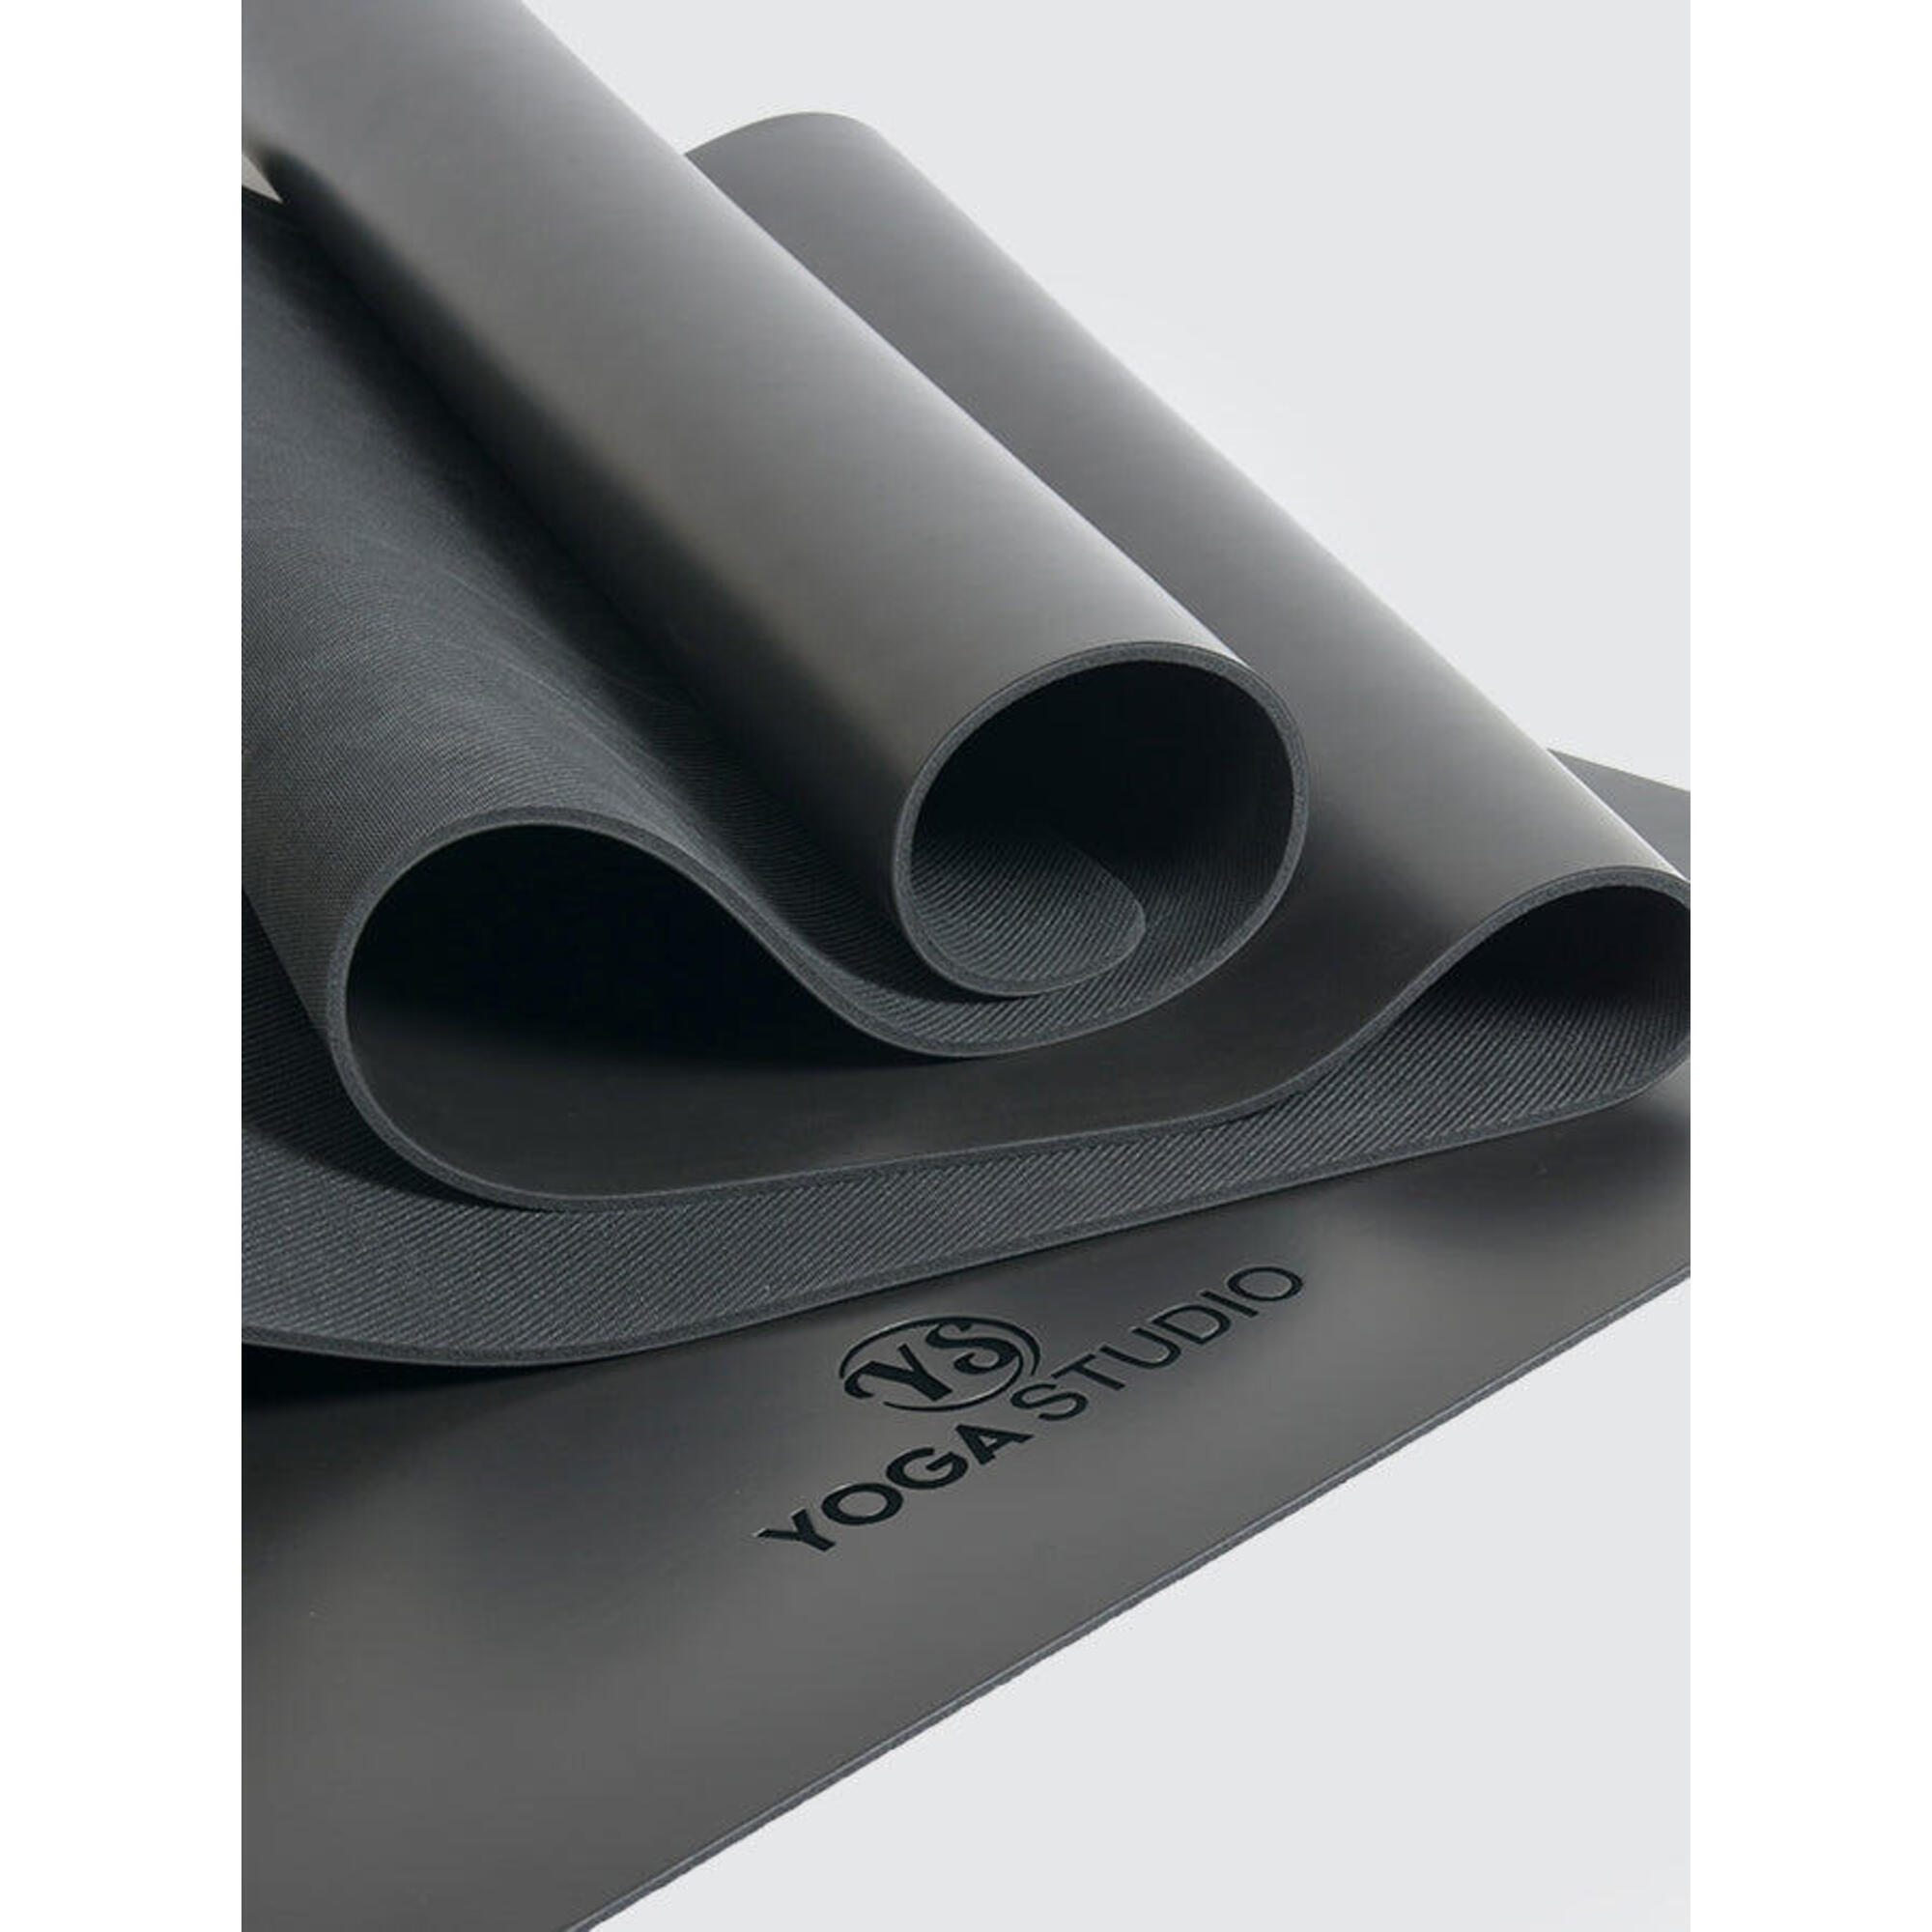 Yoga Studio The Grip Compact Yoga Mat 4mm - Black 1/4